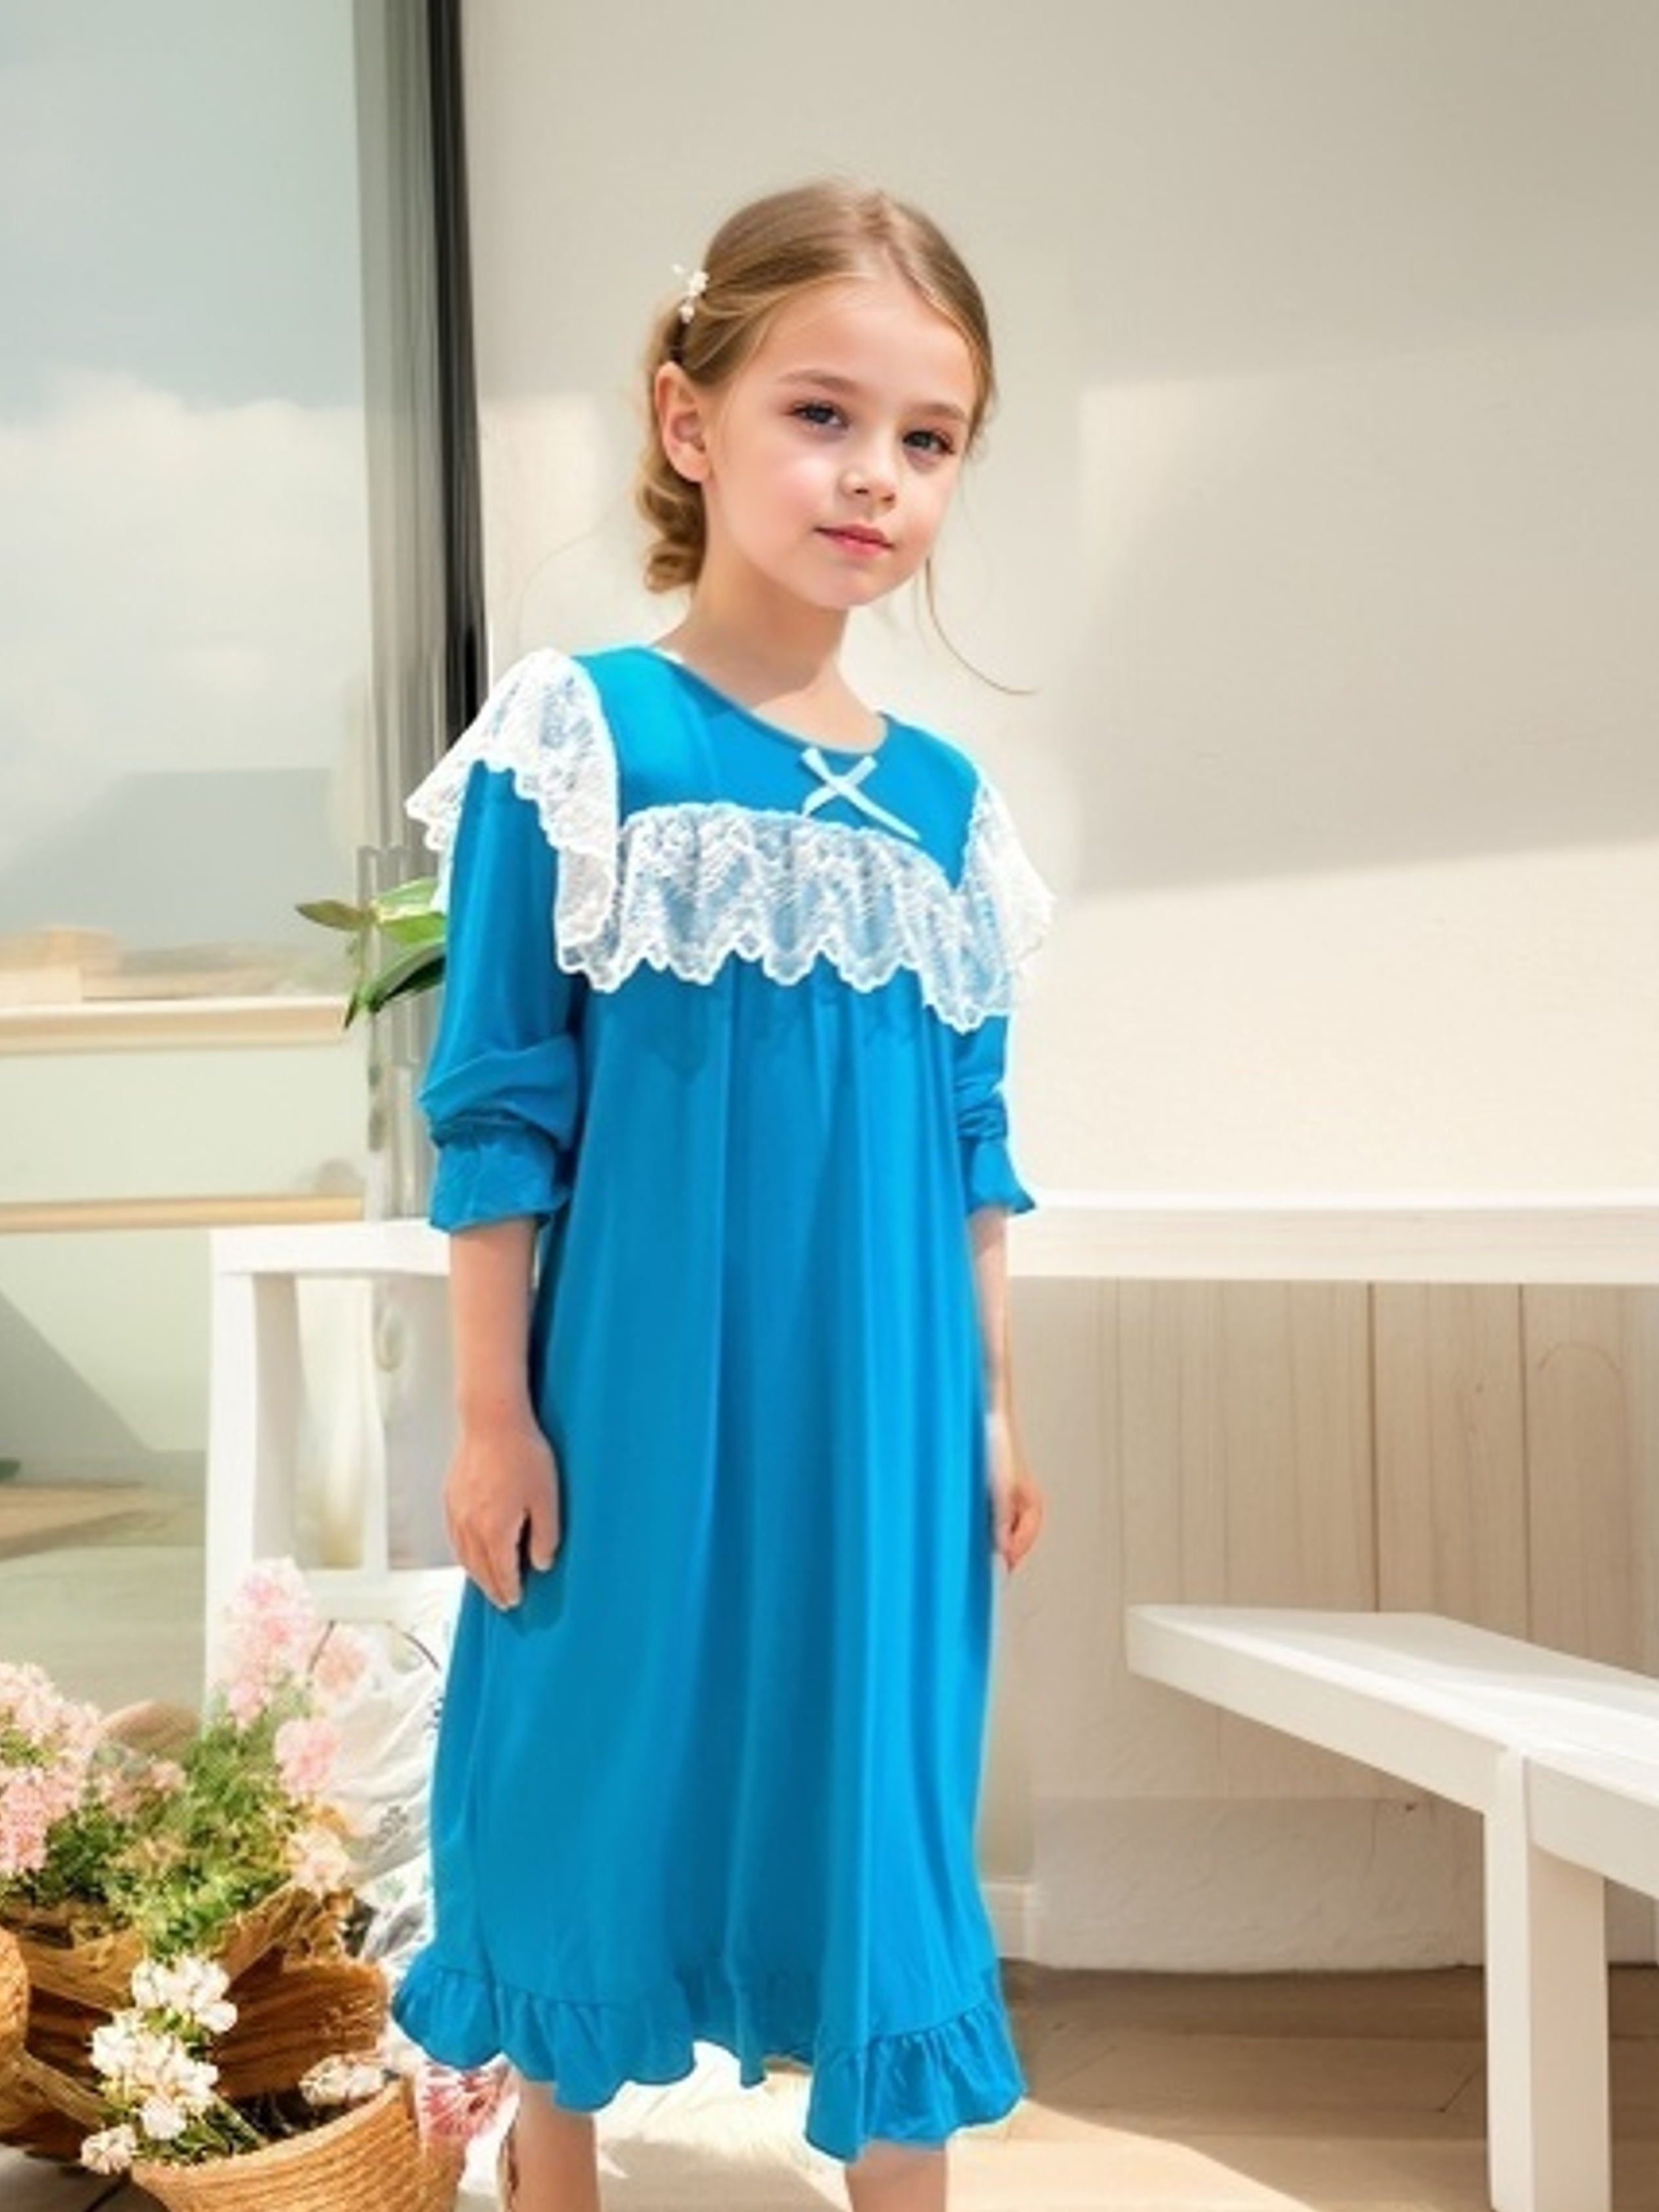 Children Kid Girl Sleeveless Nightgown Sleep Dress Nightwear Modal Princess